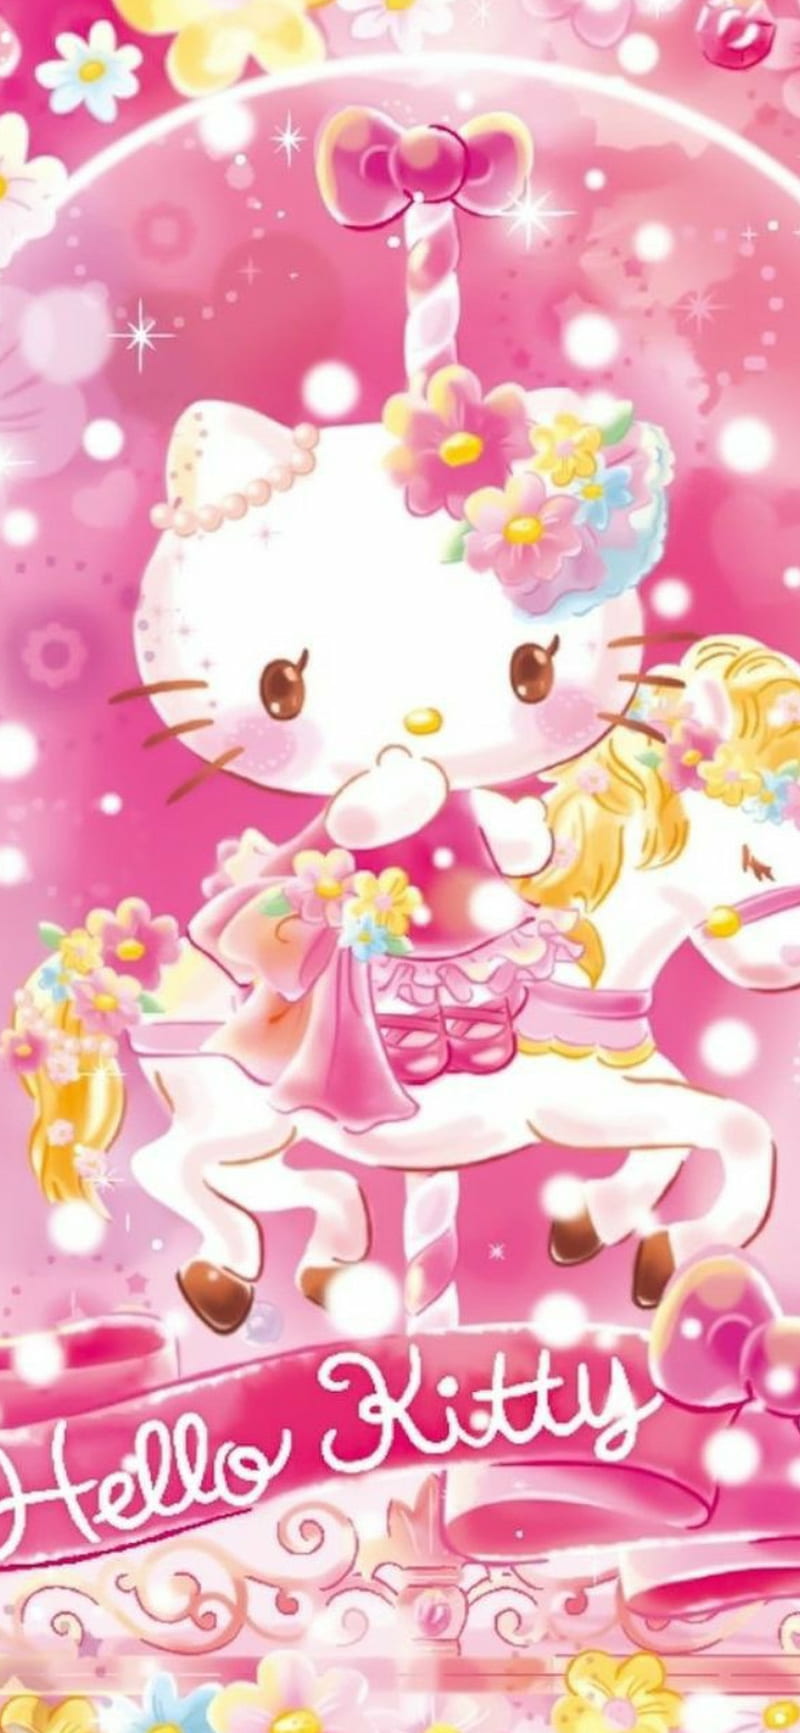 https://w0.peakpx.com/wallpaper/391/941/HD-wallpaper-hello-kitty-magenta-pink.jpg